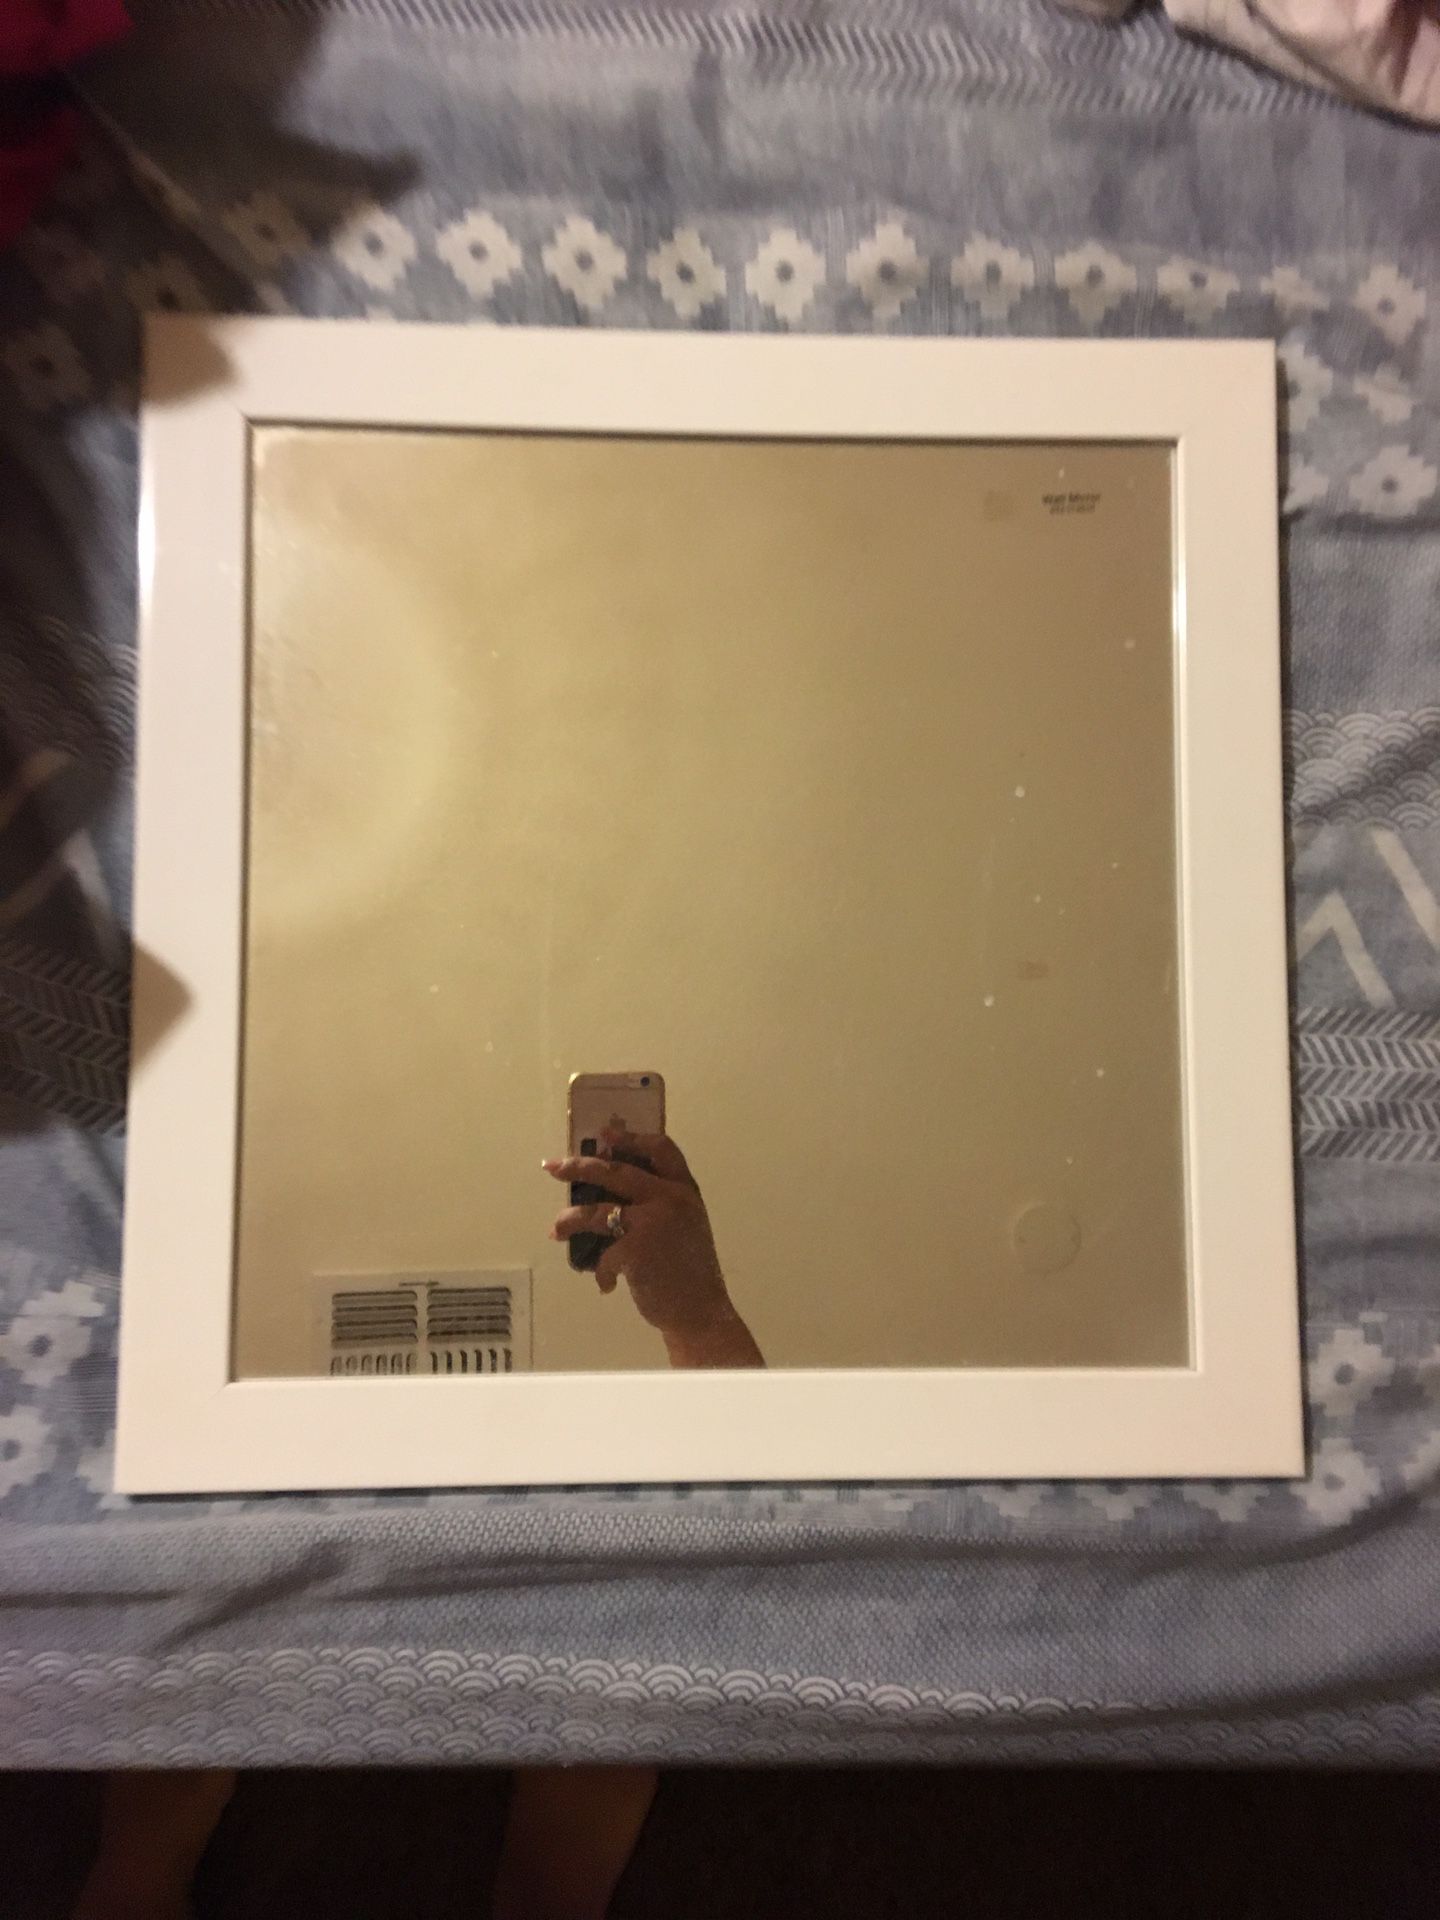 White square wall mirror